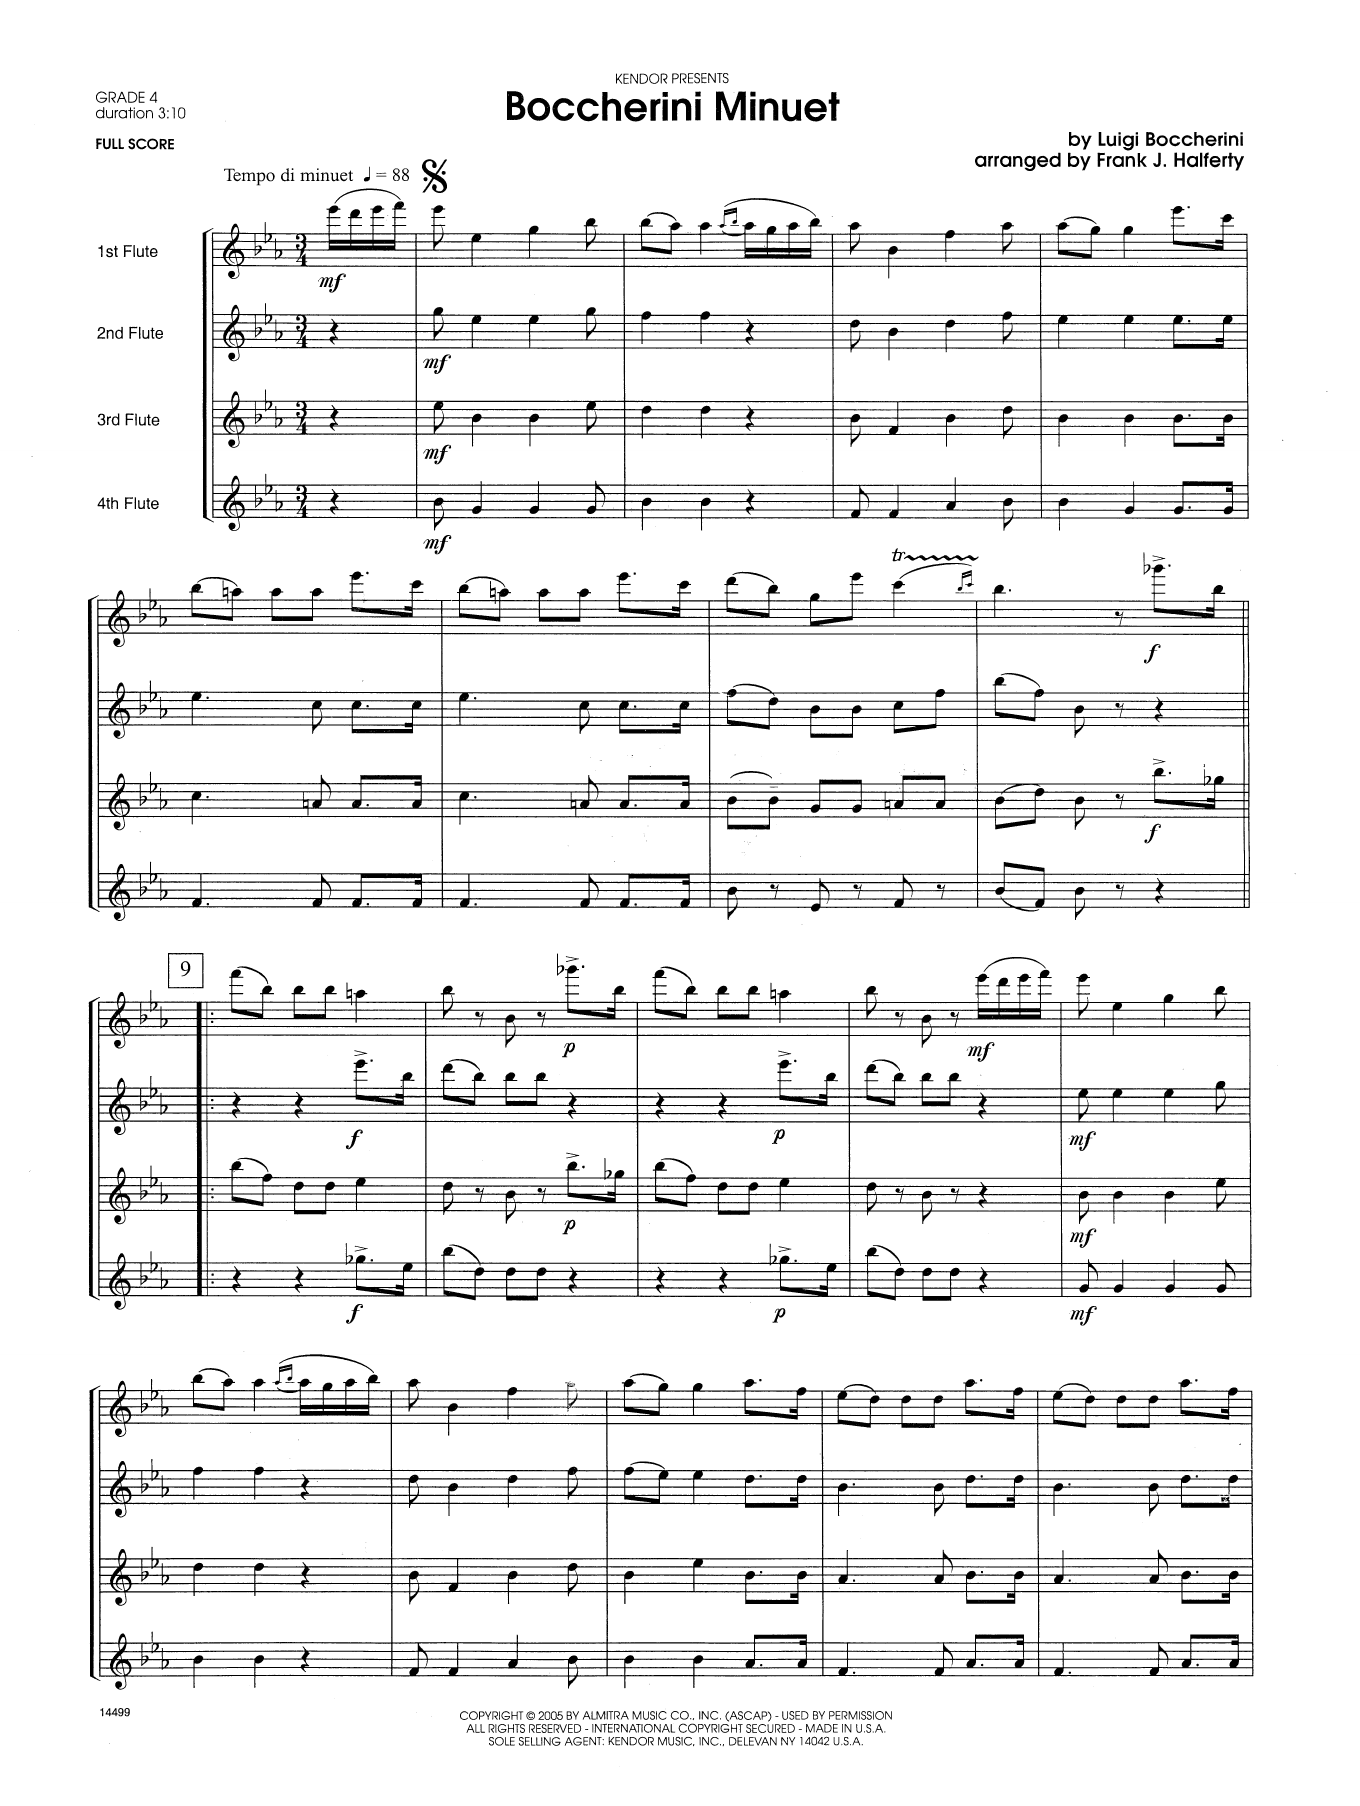 Download Frank J. Halferty Boccherini Minuet - Full Score Sheet Music